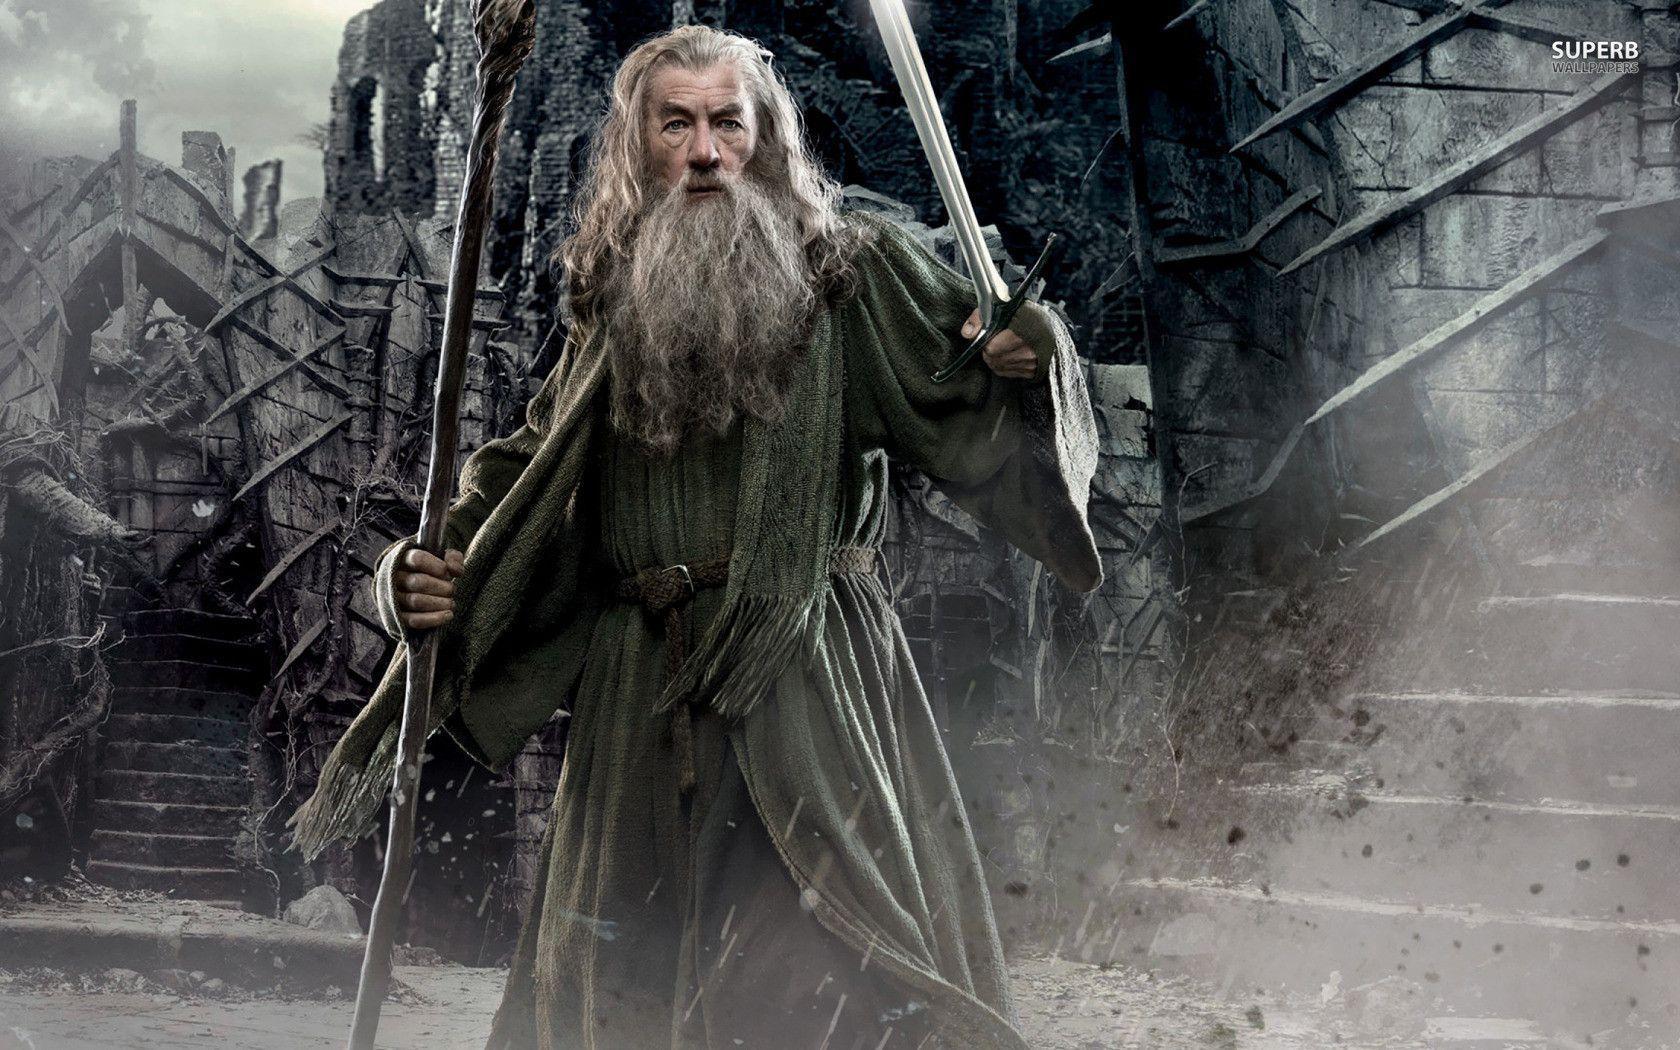 Gandalf Hobbit: The Desolation of Smaug wallpaper